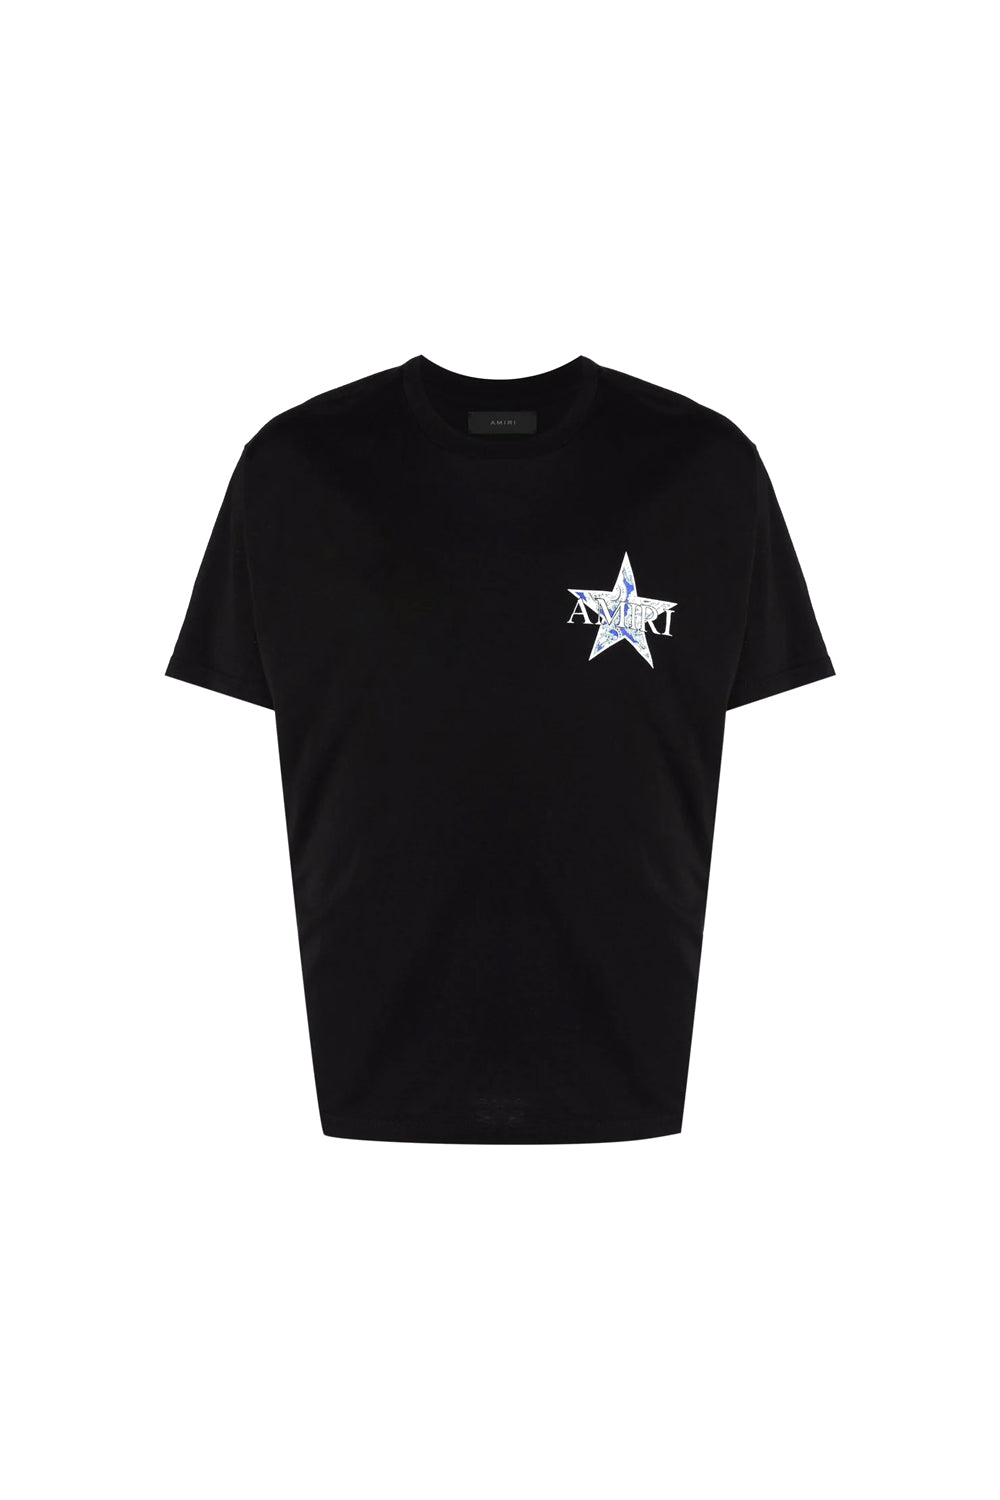 AMIRI star black T-shirt